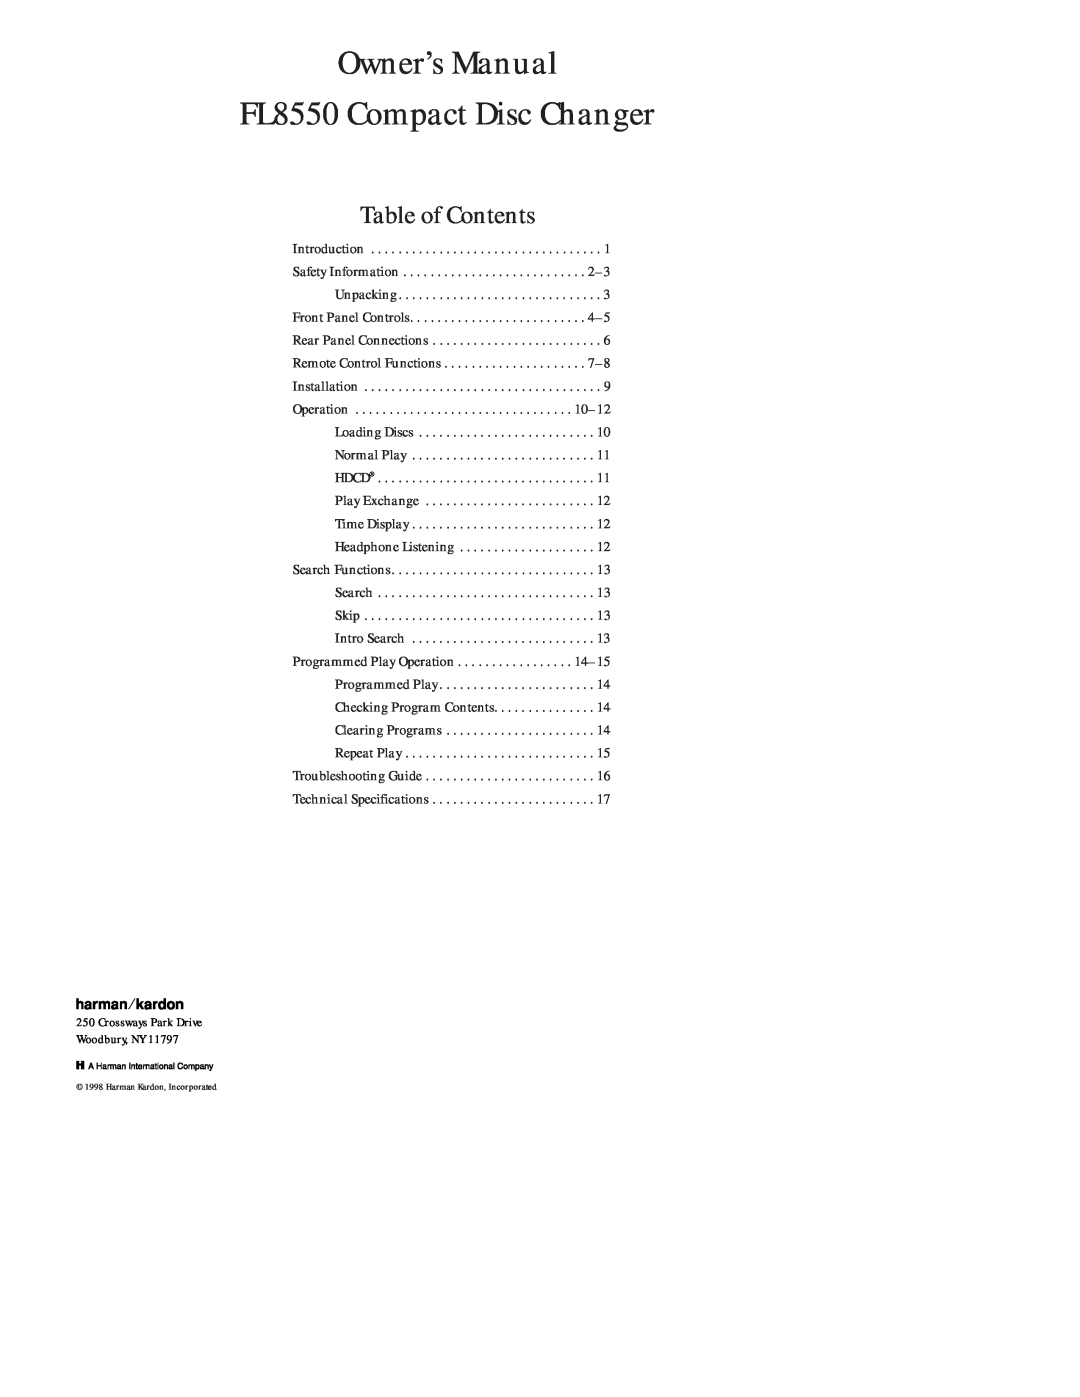 Harman-Kardon FL8550 owner manual Table of Contents 